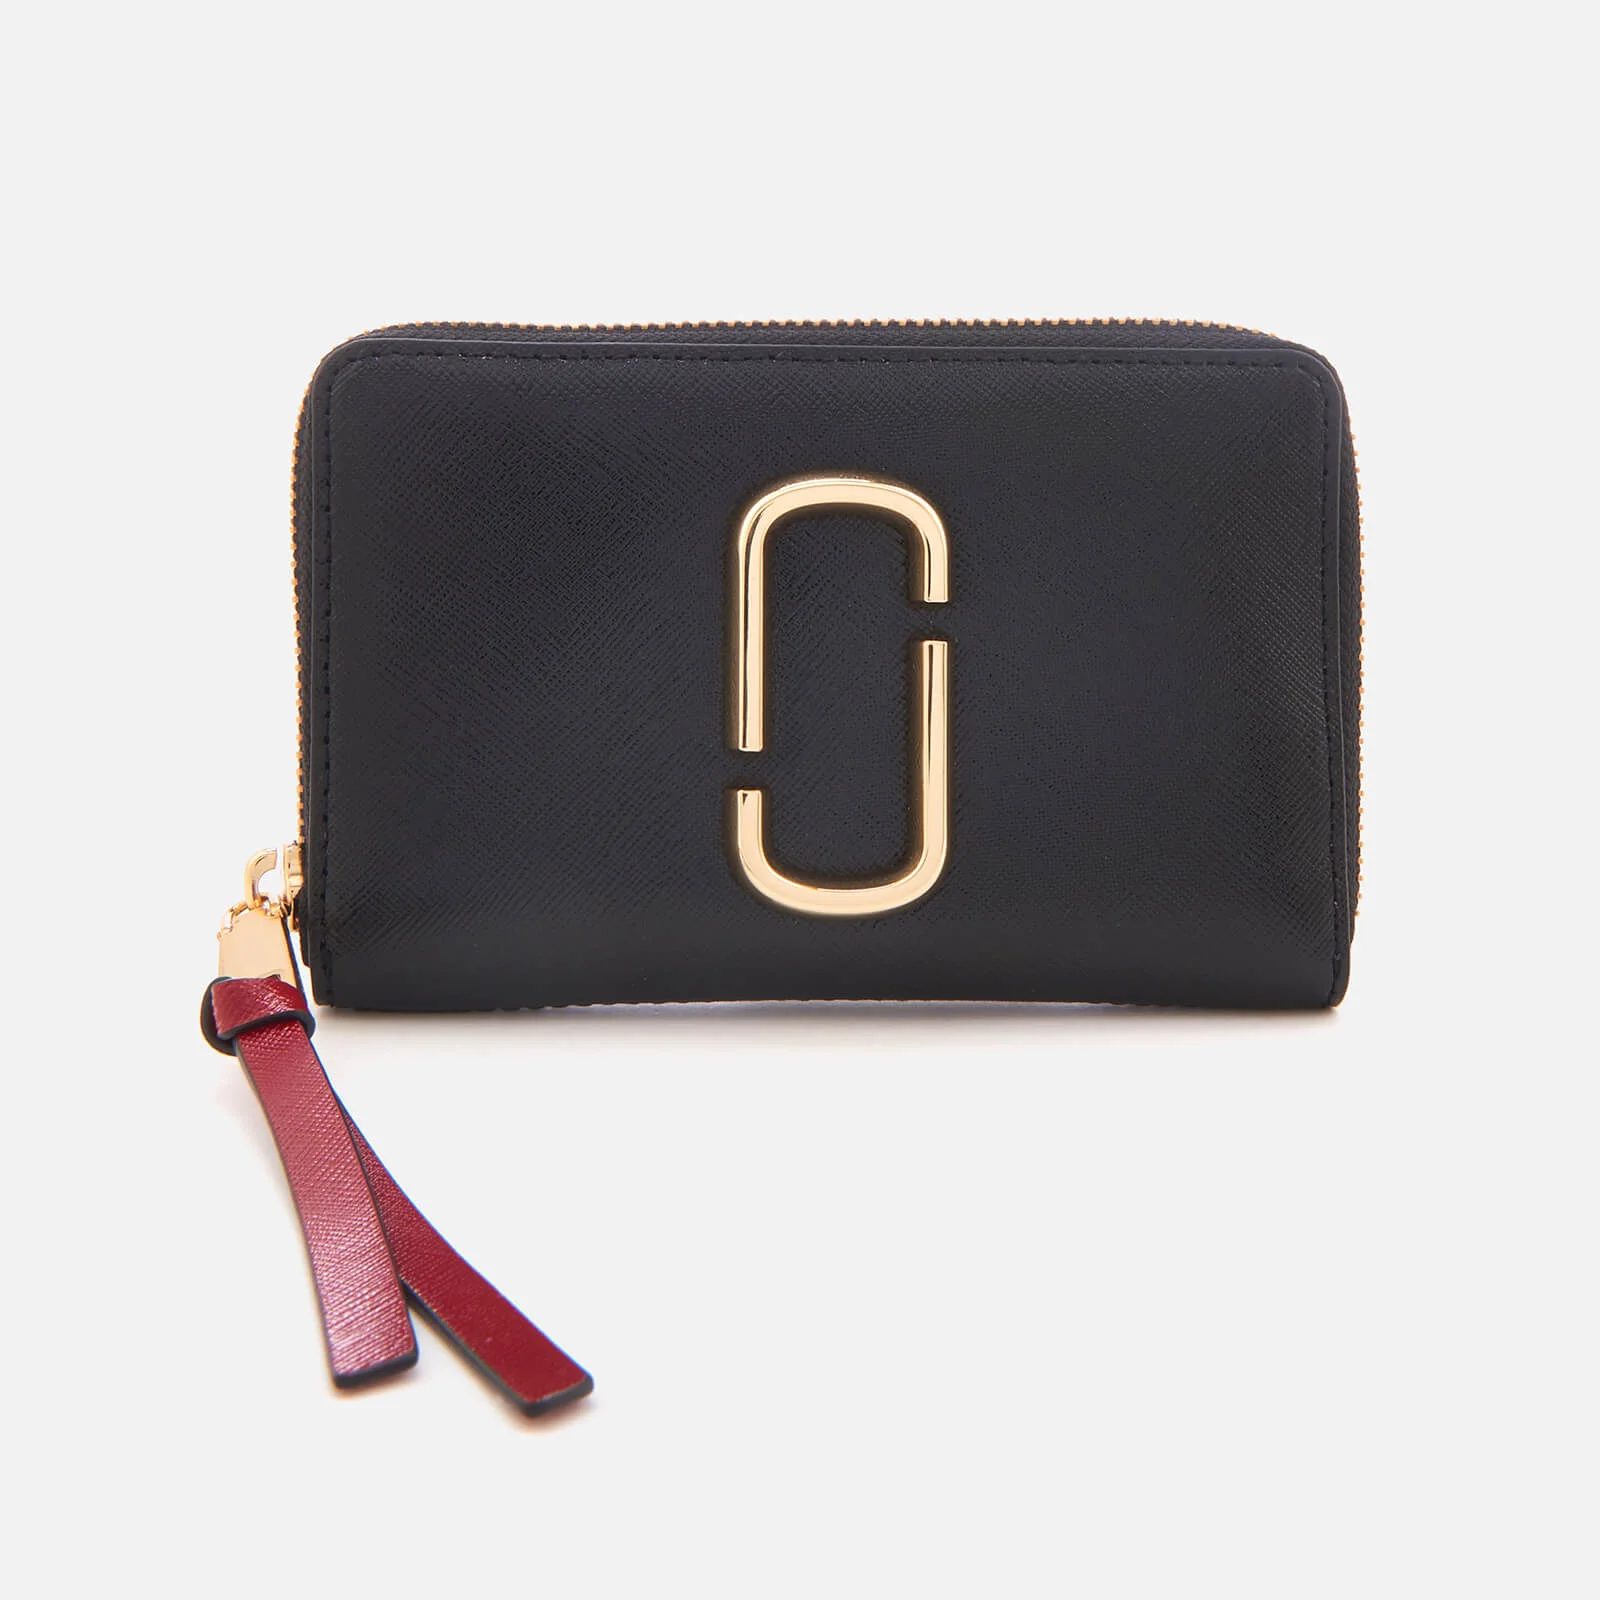 Marc Jacobs Women's Small Standard Zip Around Purse - Black/Chianti Image 1